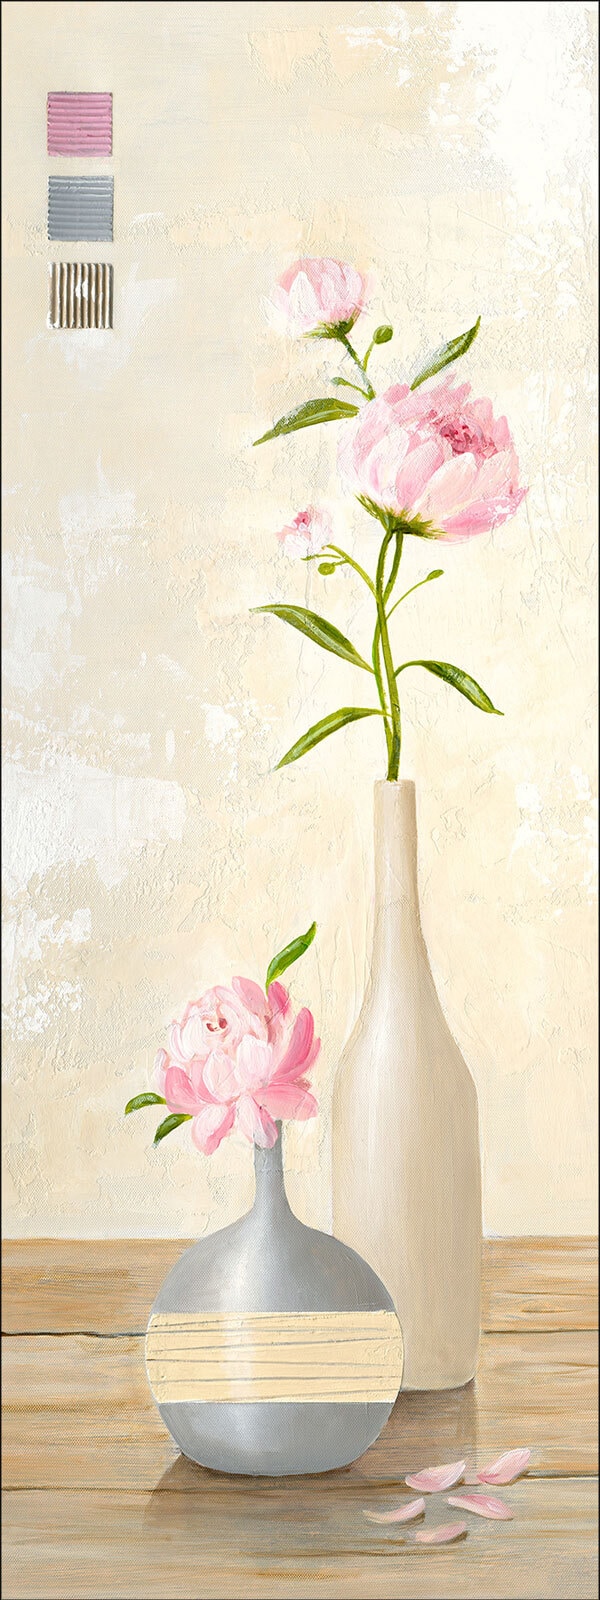 PRO ART Canvas-Art Bild FLOWER STILLLIFE I 80 x 30 cm mehrfarbig